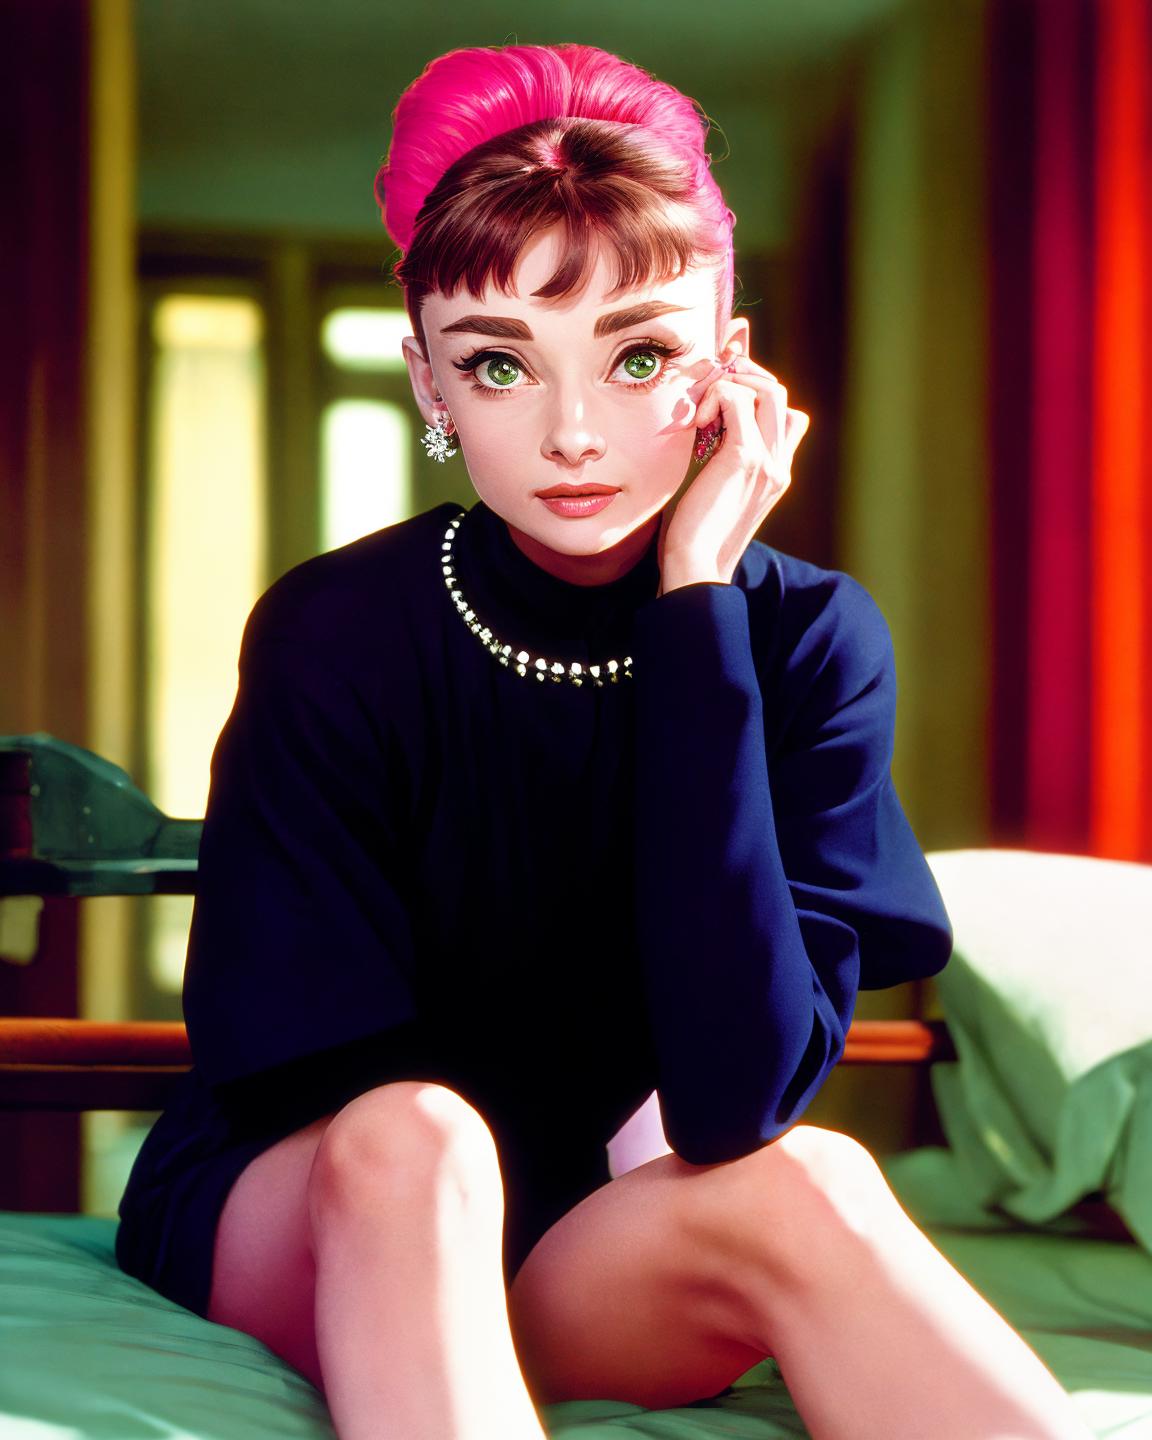 Audrey Hepburn image by MrHong